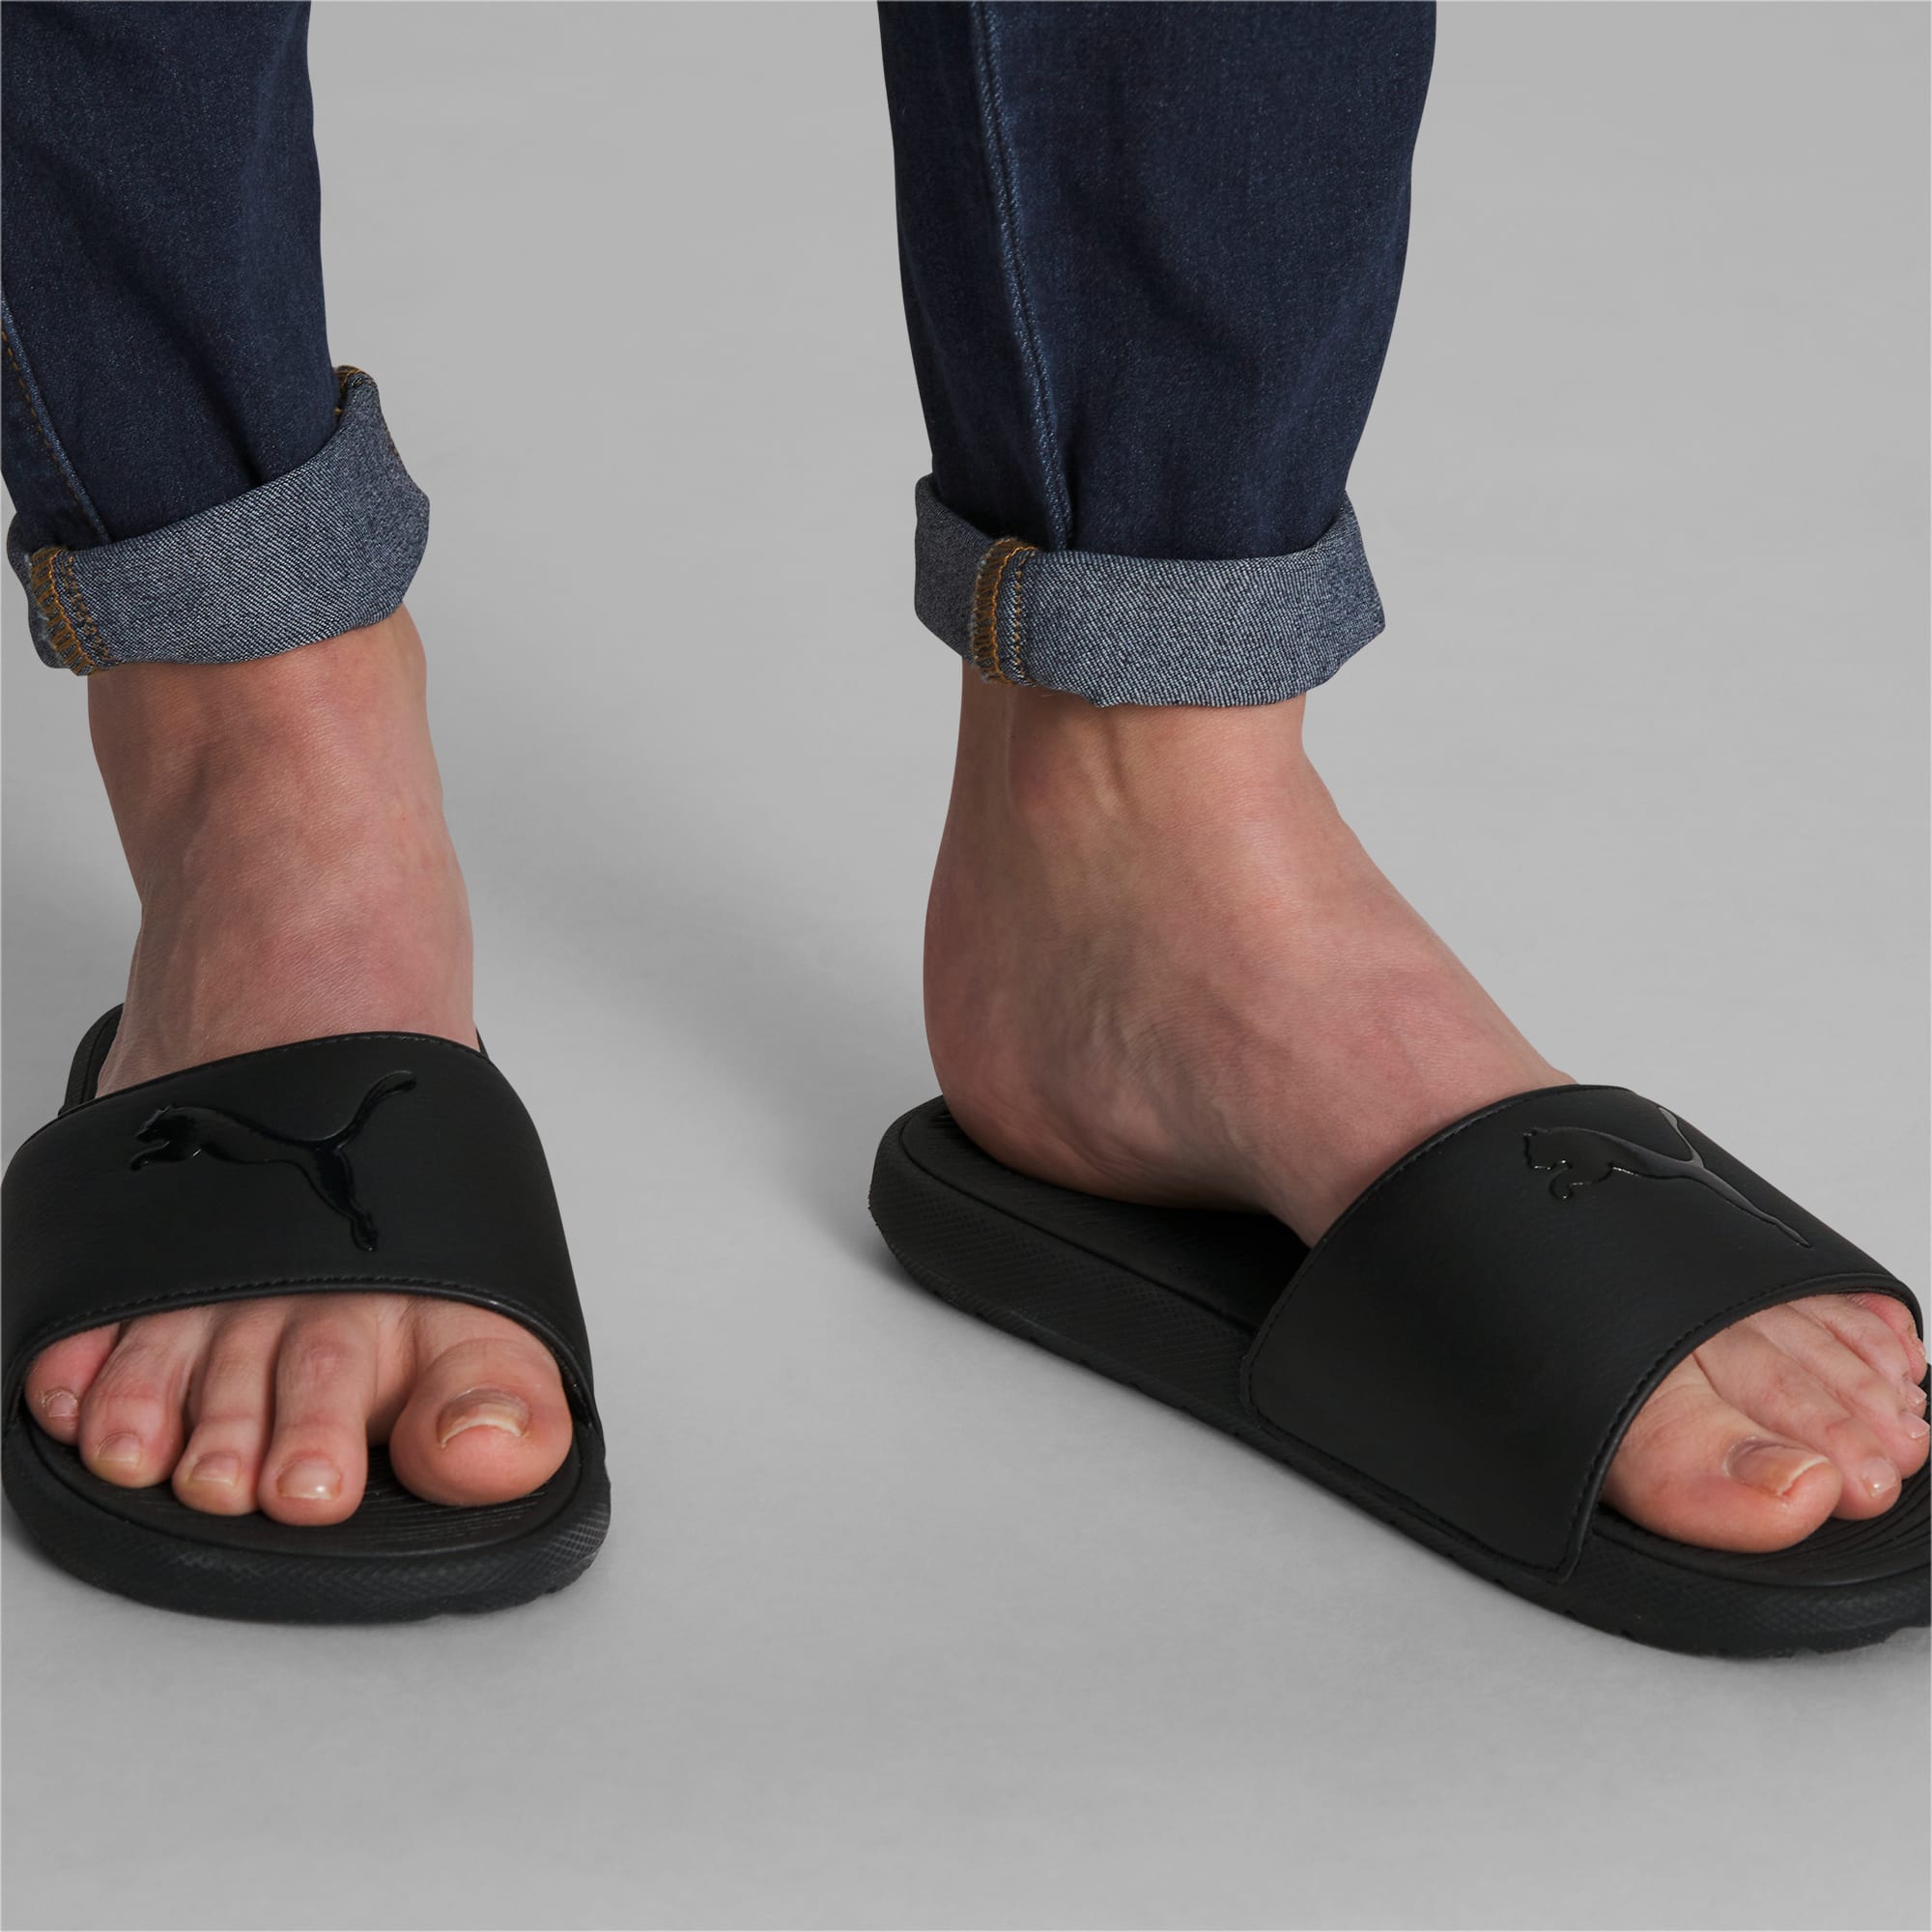 Sandals for Women, Flip-Flops, Sport Slides